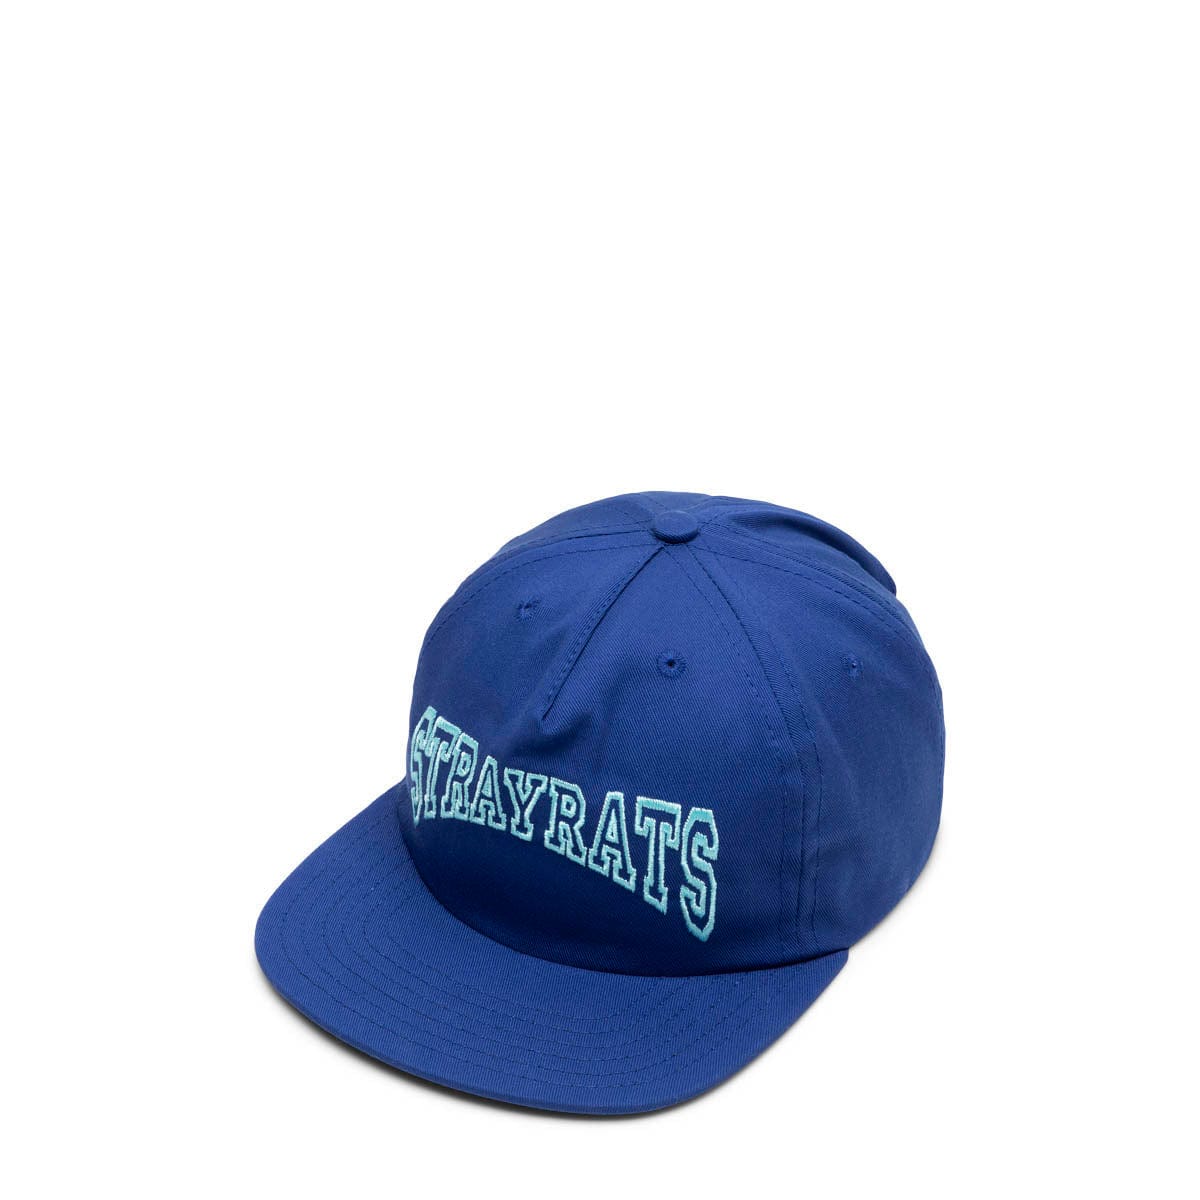 Stray Rats Headwear BLUE / O/S COLLEGE ARCH LOGO HAT